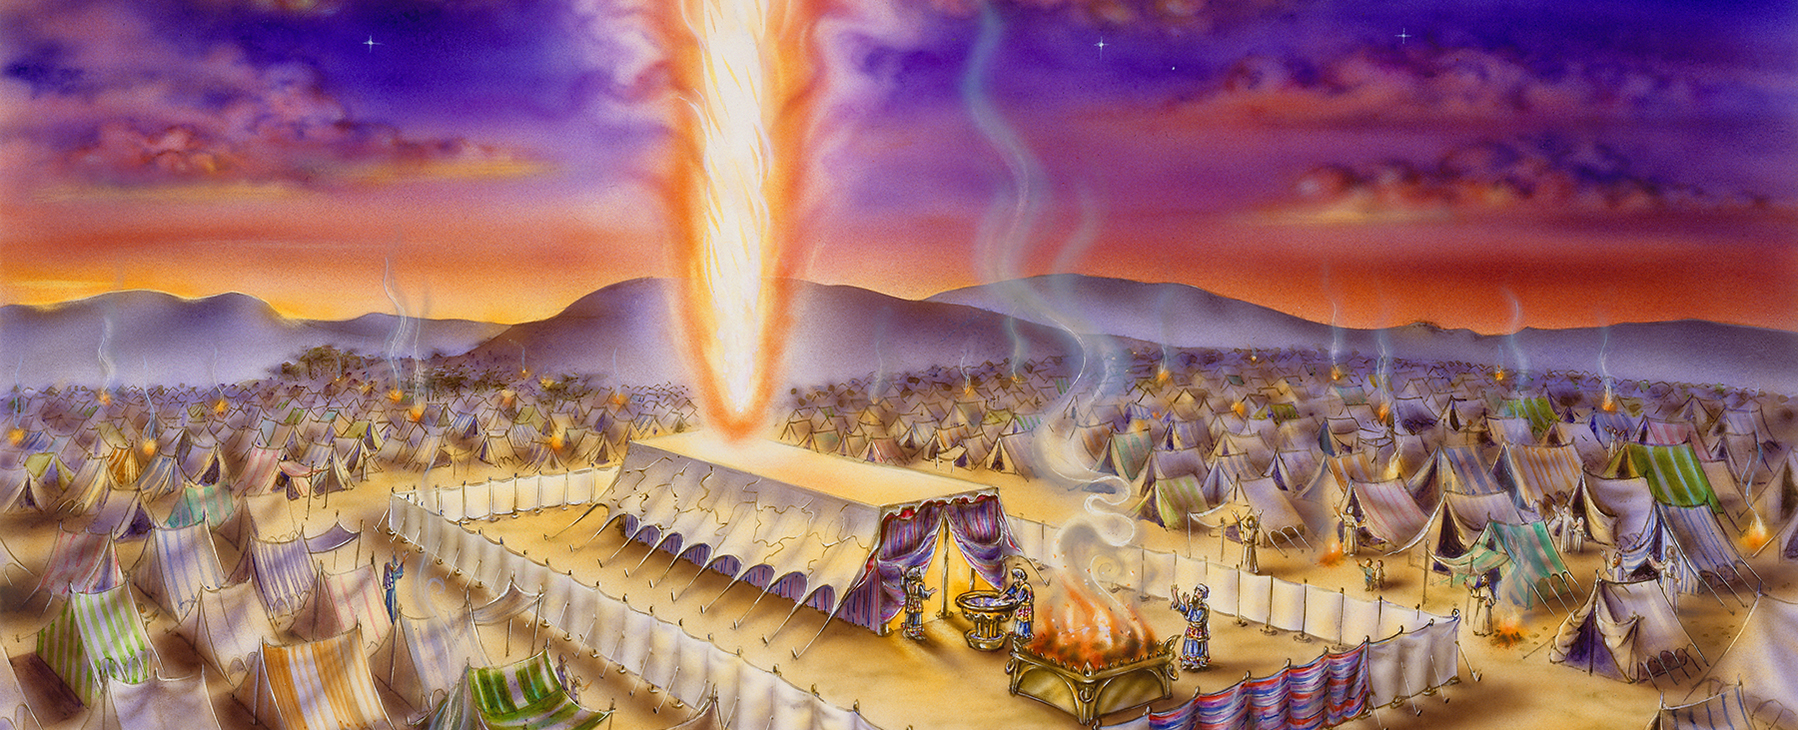 Revelation Illustrated Religious Artwork Books Downloads Cds Dvds